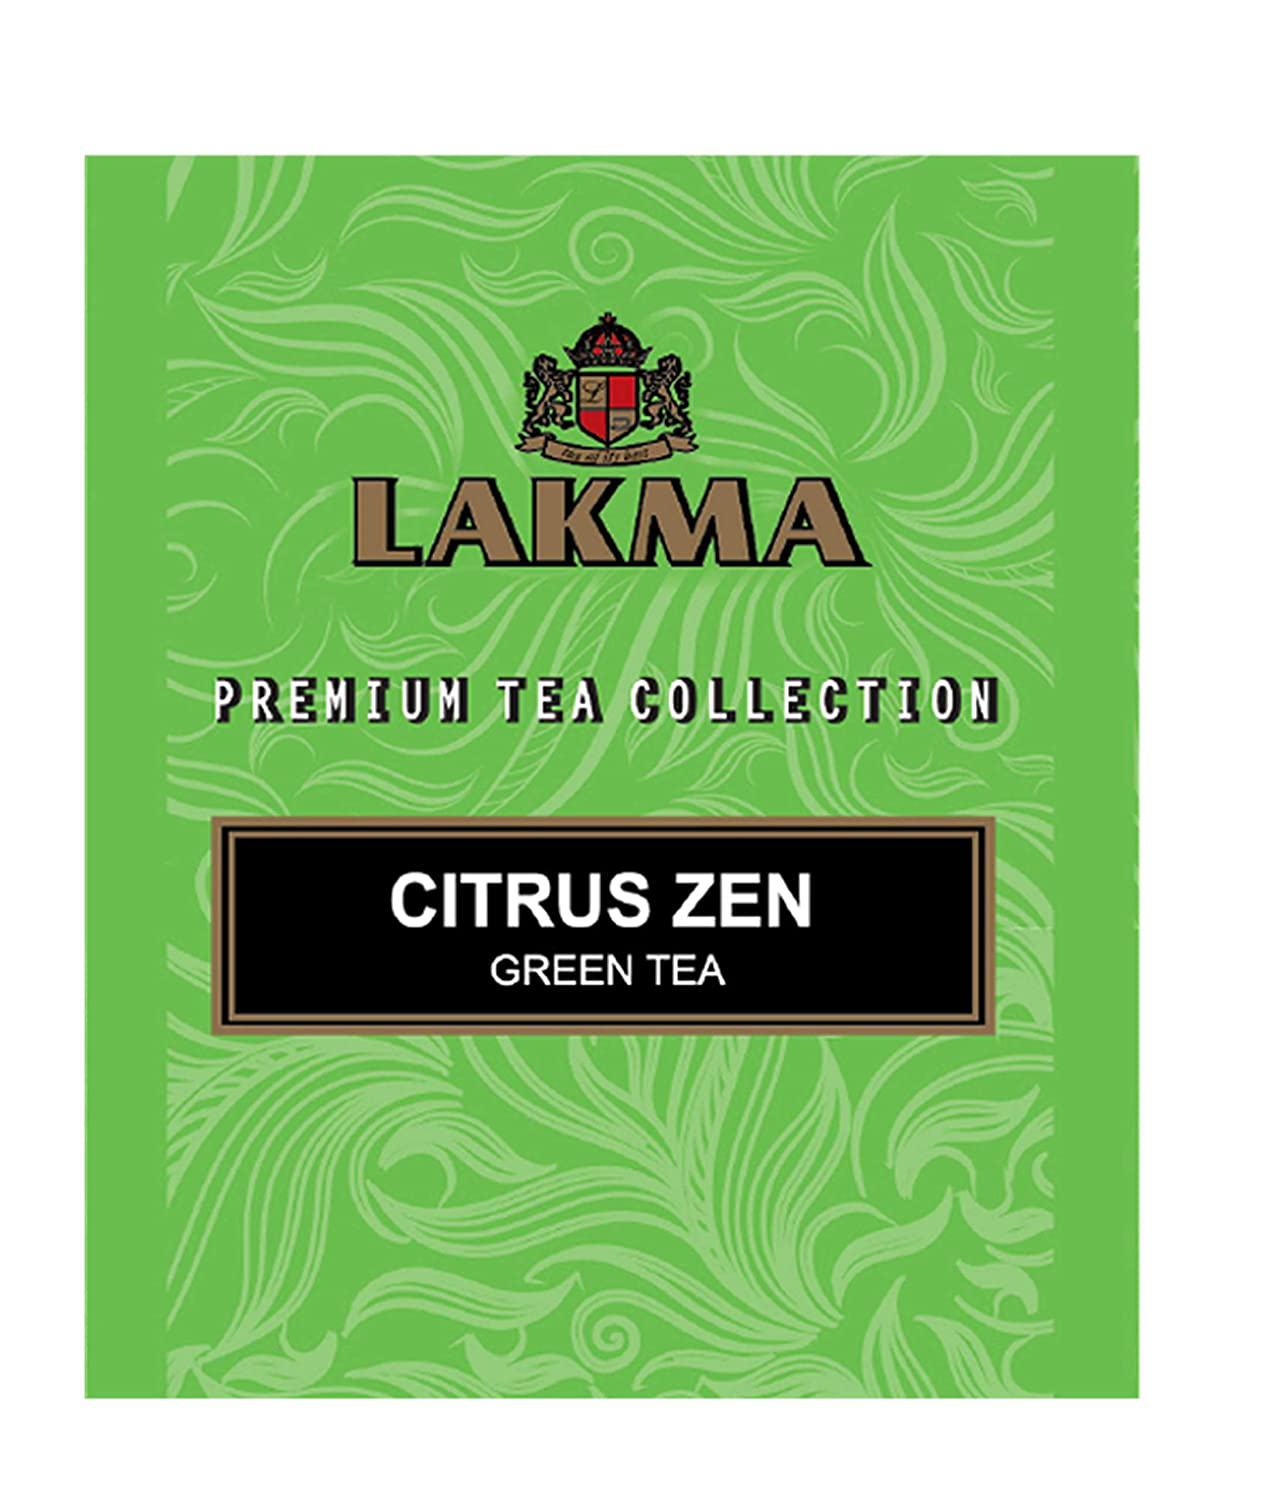 Lakma Premium Collection Citrus Zen Green Tea - 20 Tea Bags 100% Natural, Sugar Free, Gluten Free and Non-GMO)